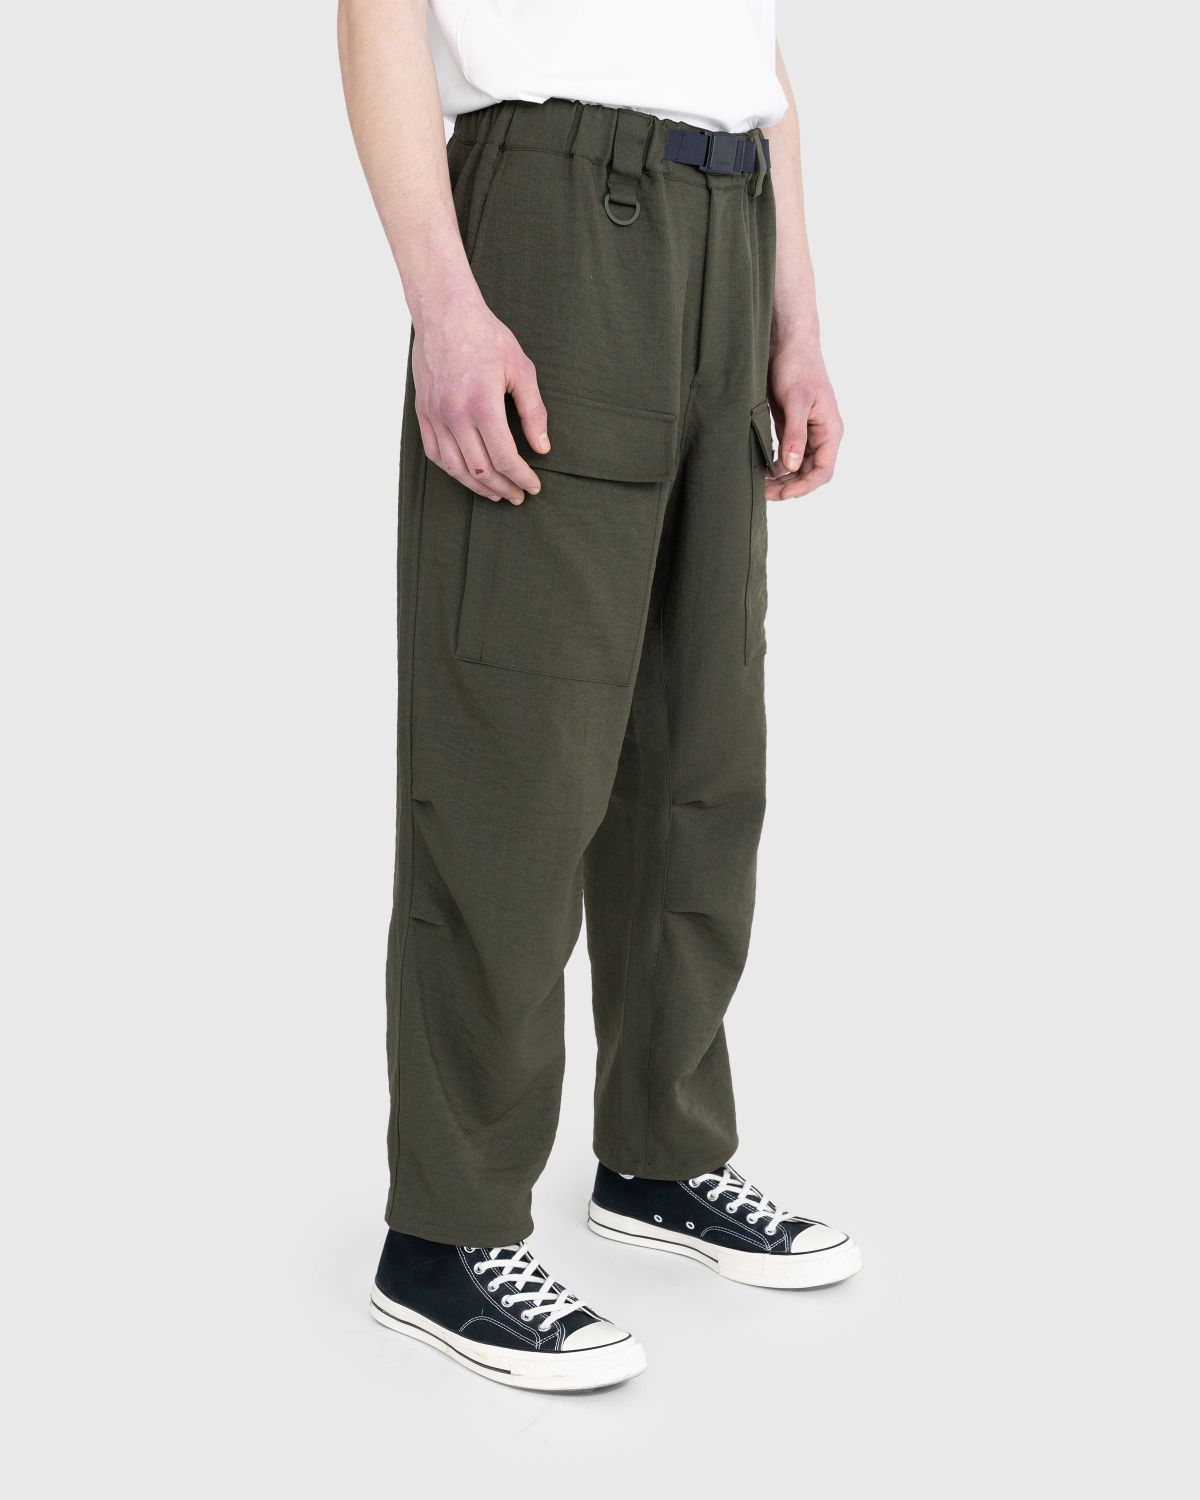 Y-3 – CL SL Cargo Pants - Pants - Green - Image 4